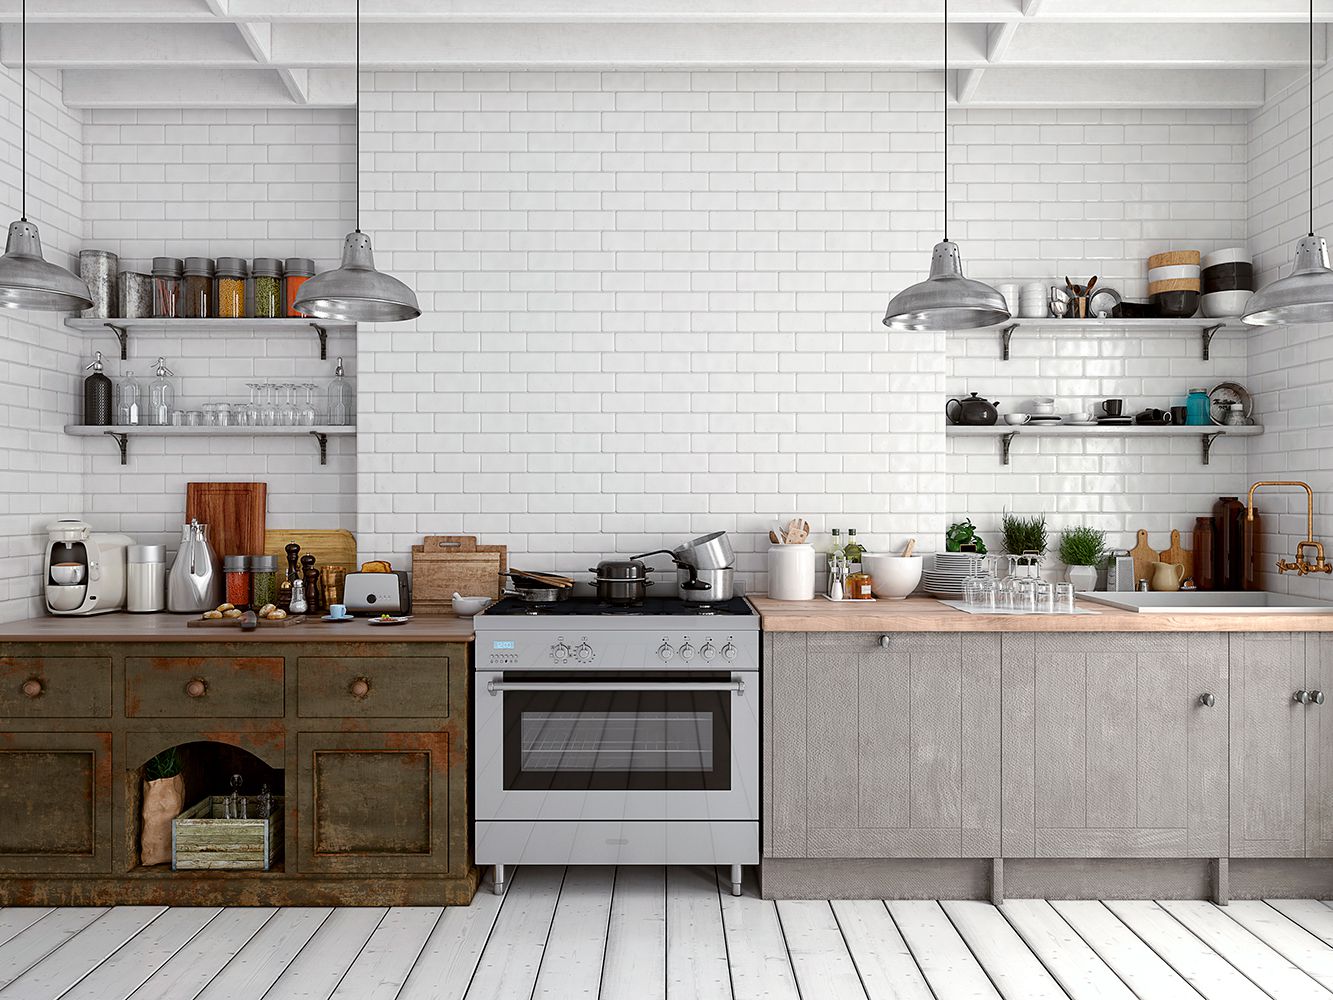 White Brick Backsplash In Kitchen Elegant the Best Kitchen Backsplash Materials